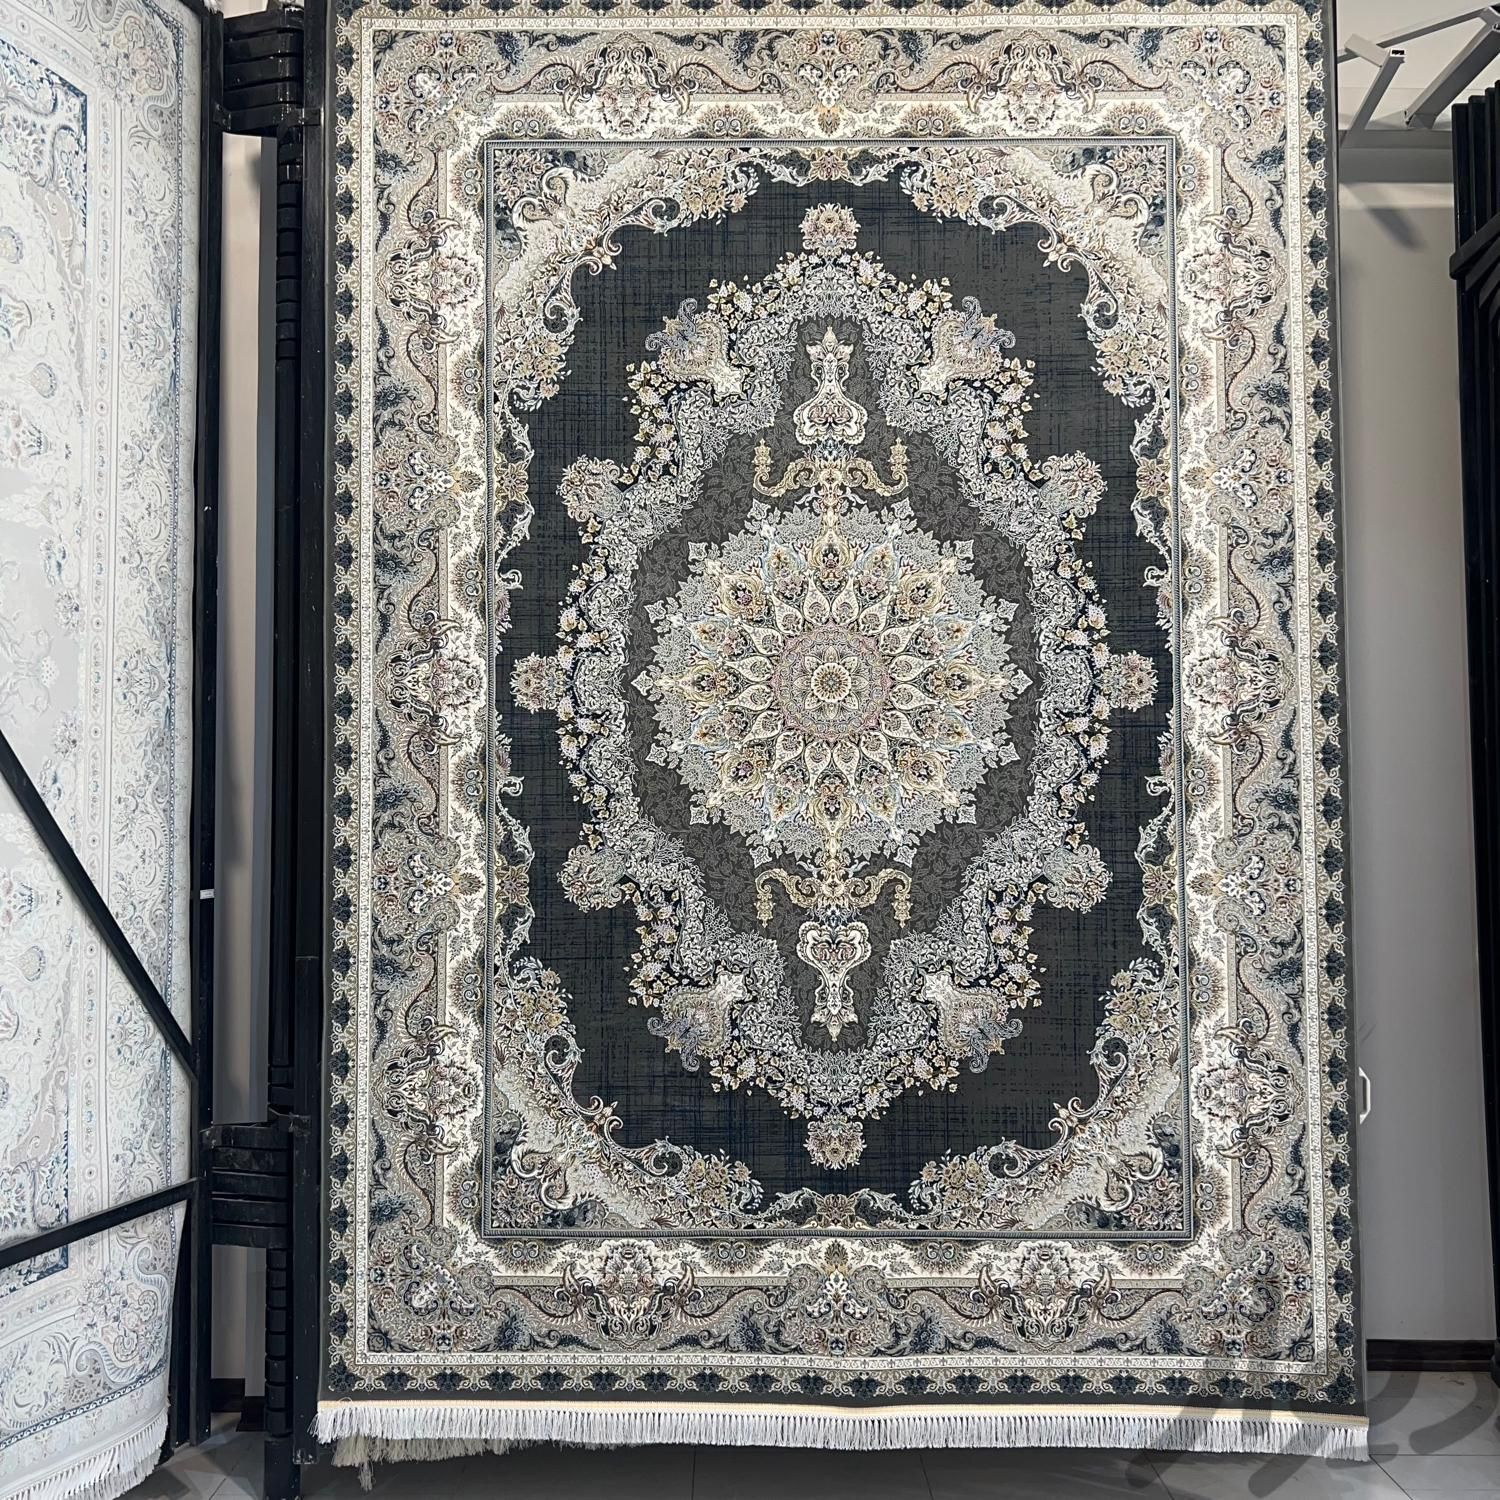 فرش شاهکار کد ۰۳|فرش|یزد, |دیوار